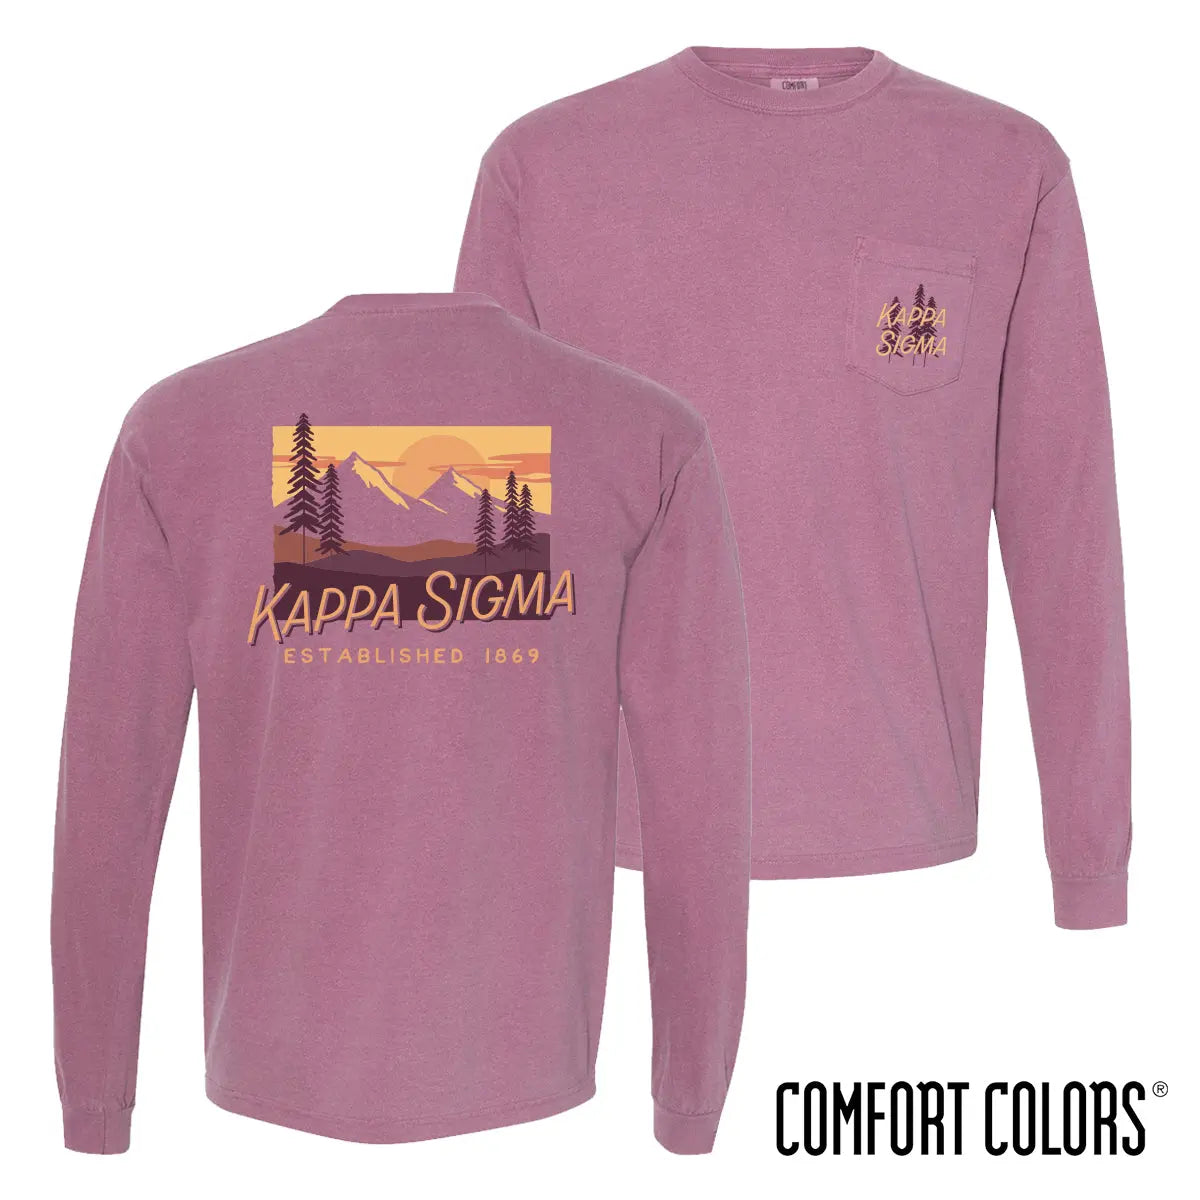 Kappa Sig Comfort Colors Berry Mountain Sunset Long Sleeve Pocket Tee - Kappa Sigma Official Store